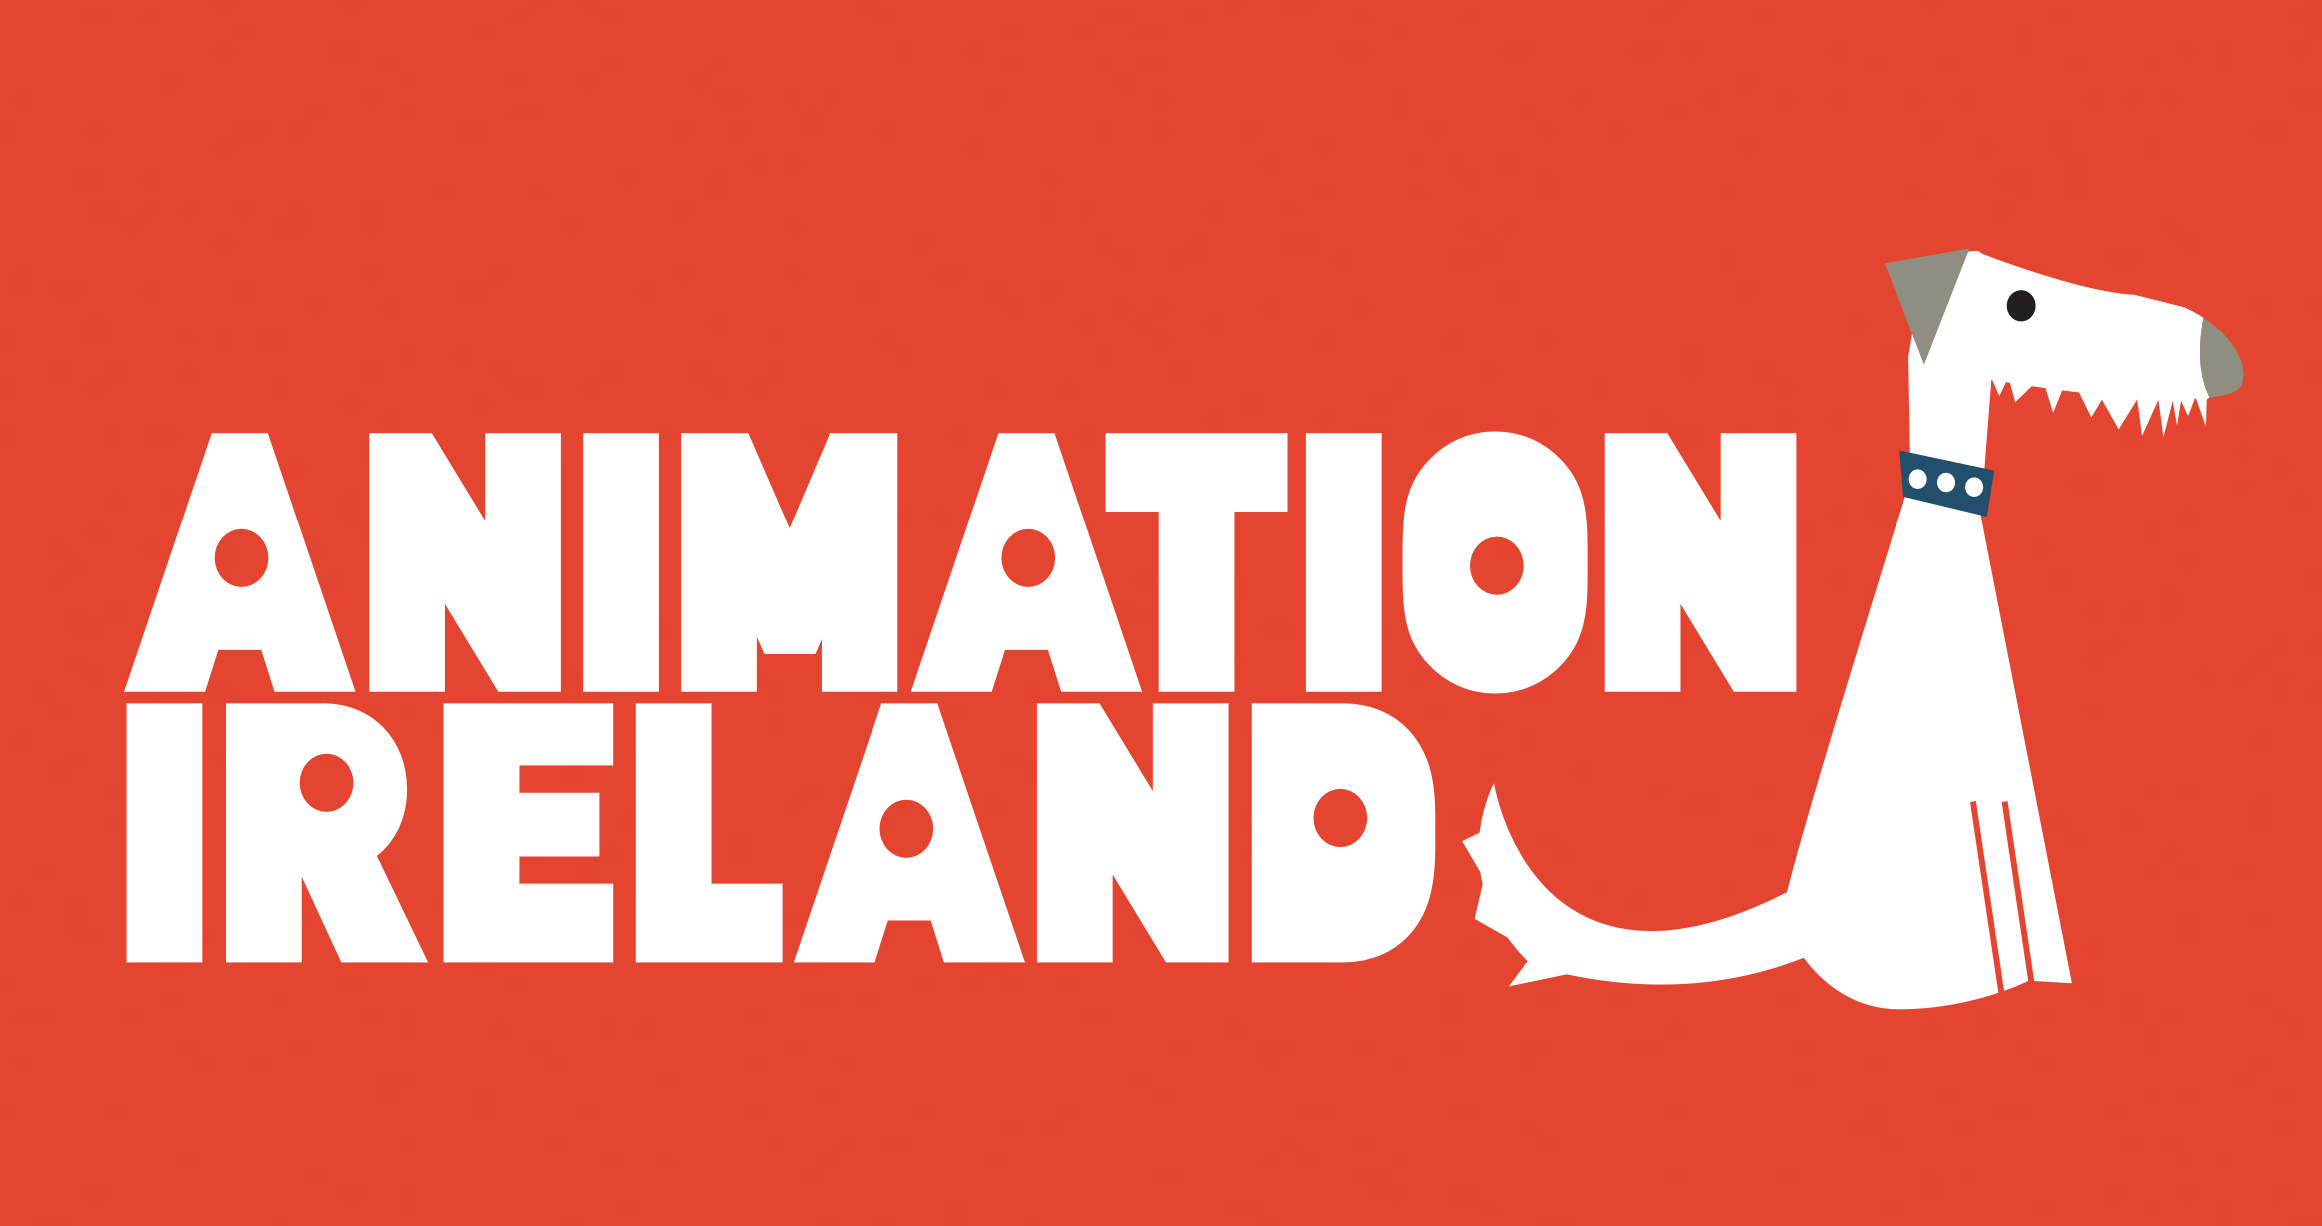 Animation ireland